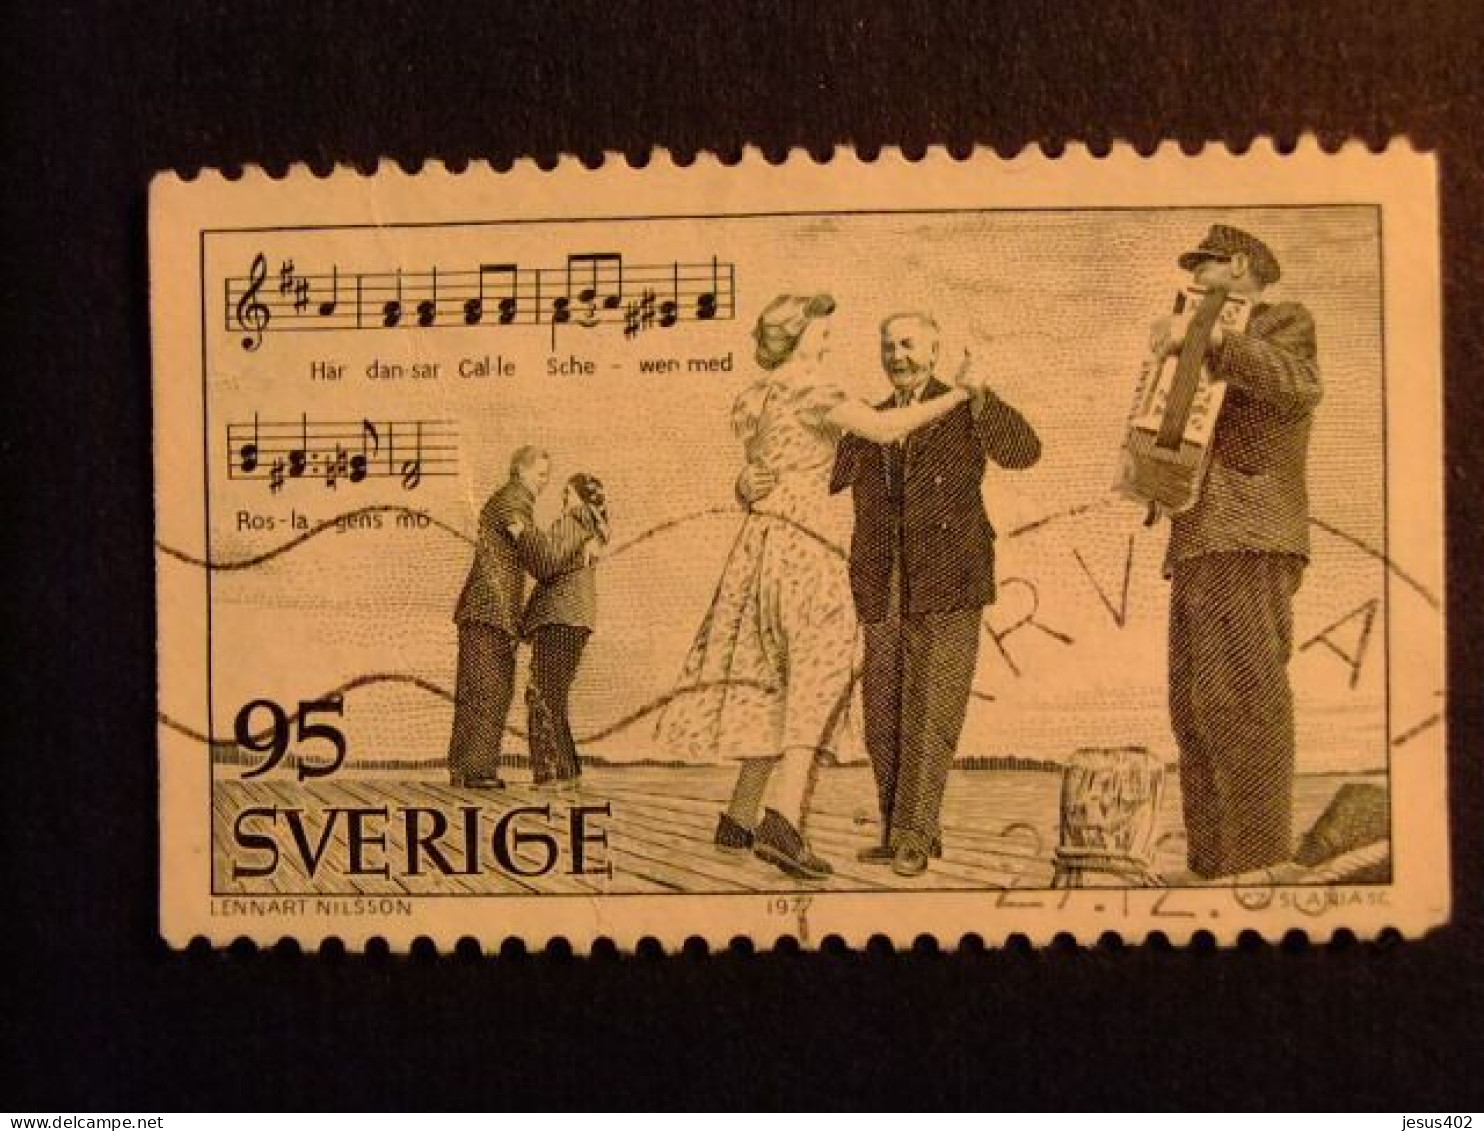 90 SUECIA SUEDE 1977 / HOMENAJE Al Poeta EVERT TAUBE / YVERT 967 FU - Used Stamps